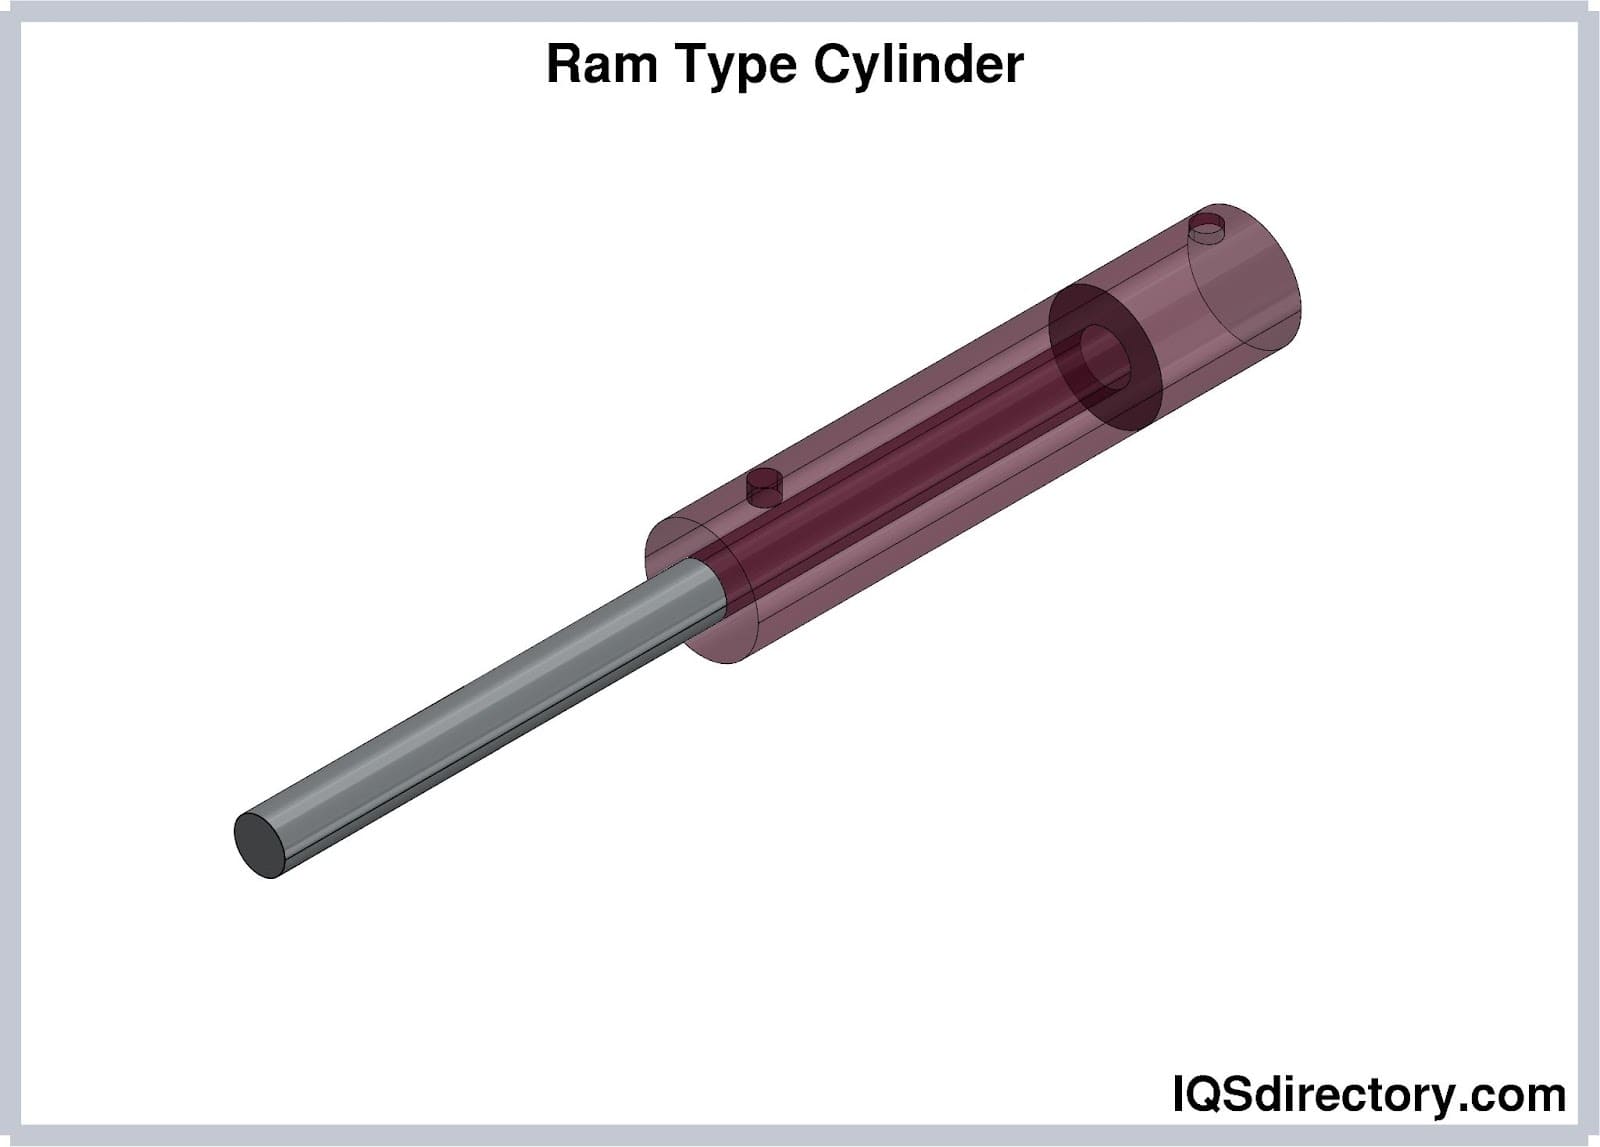 Ram Type Cylinder